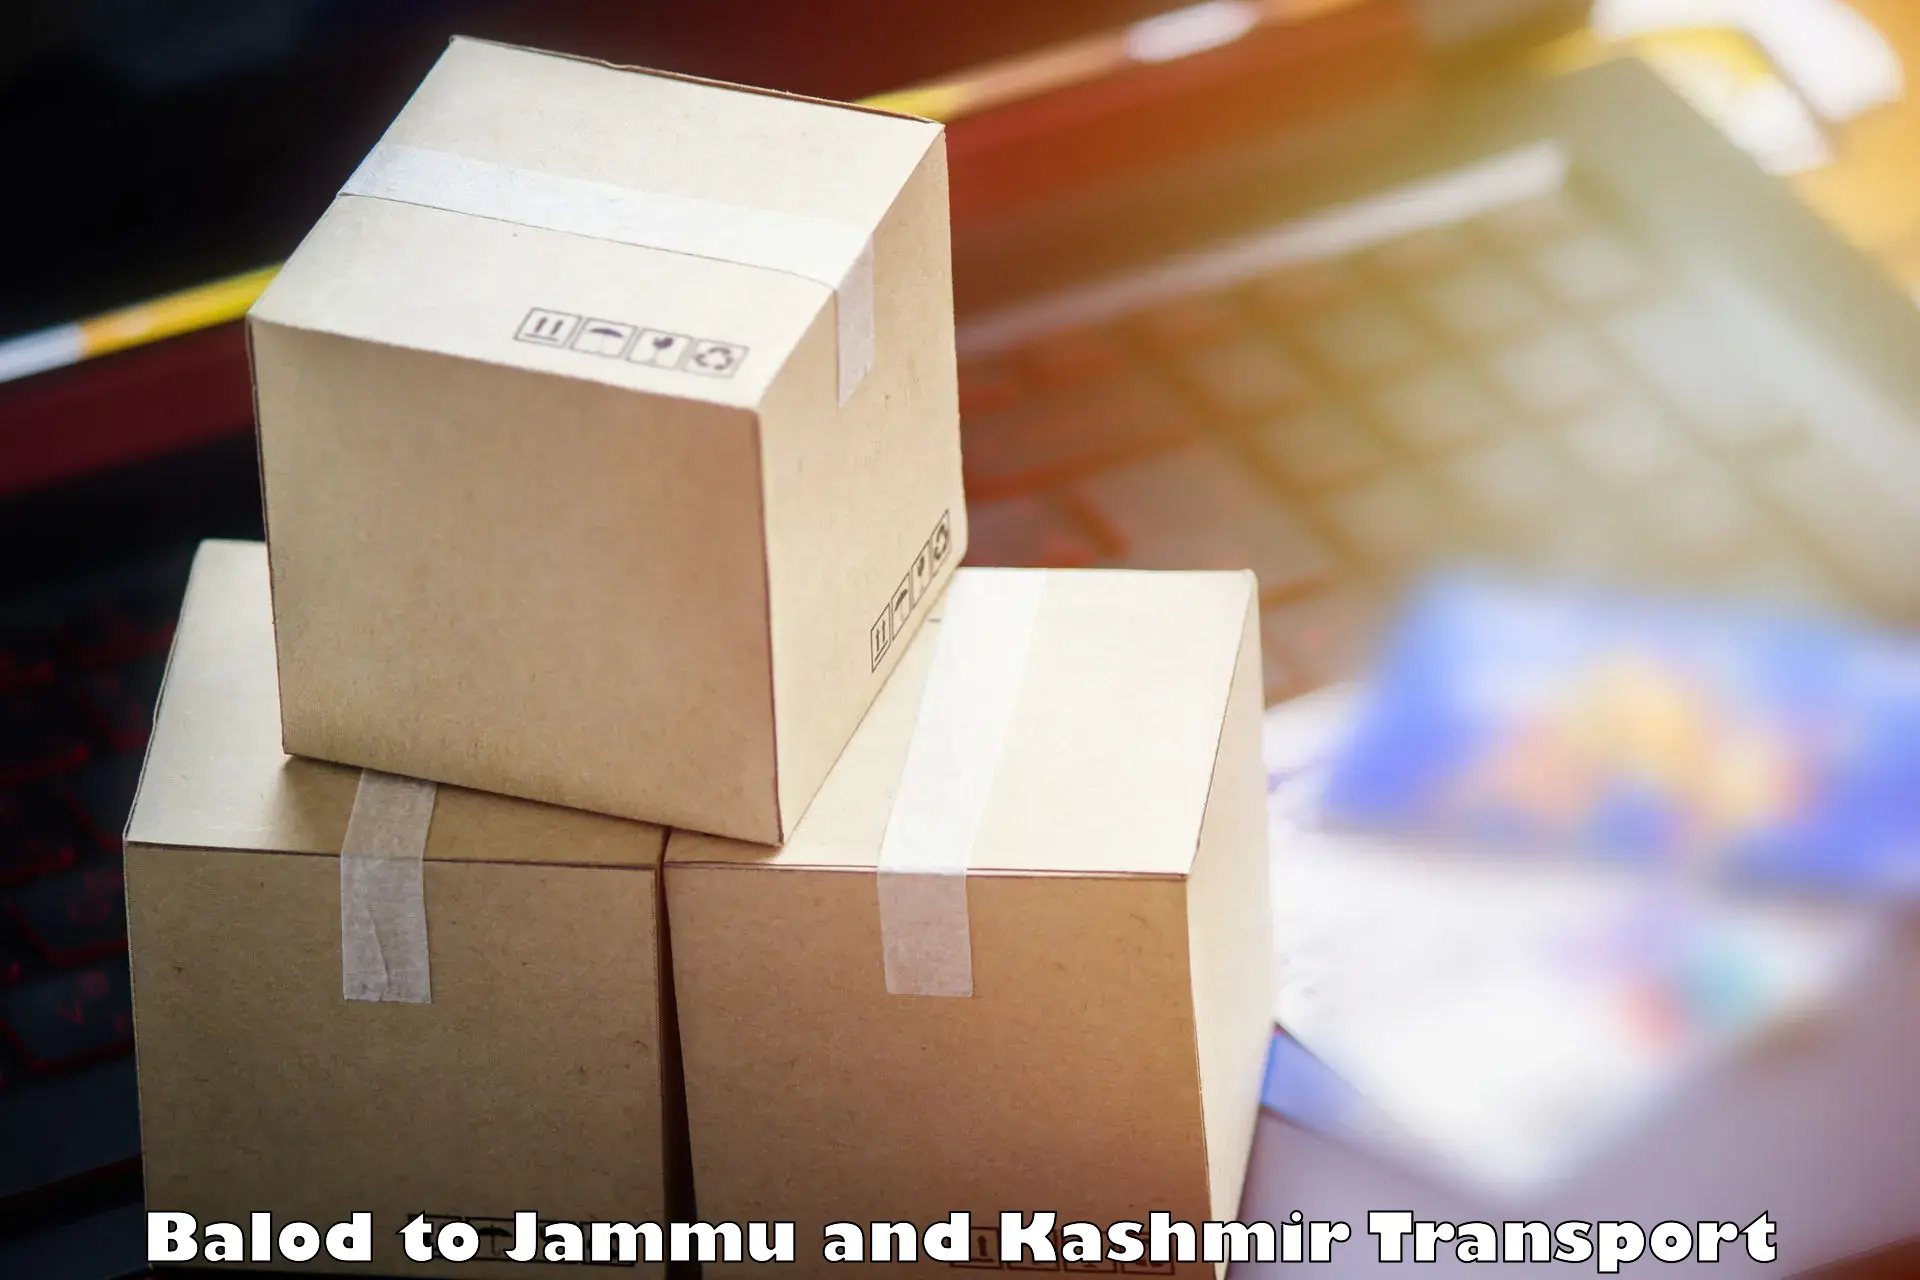 Furniture transport service Balod to Srinagar Kashmir